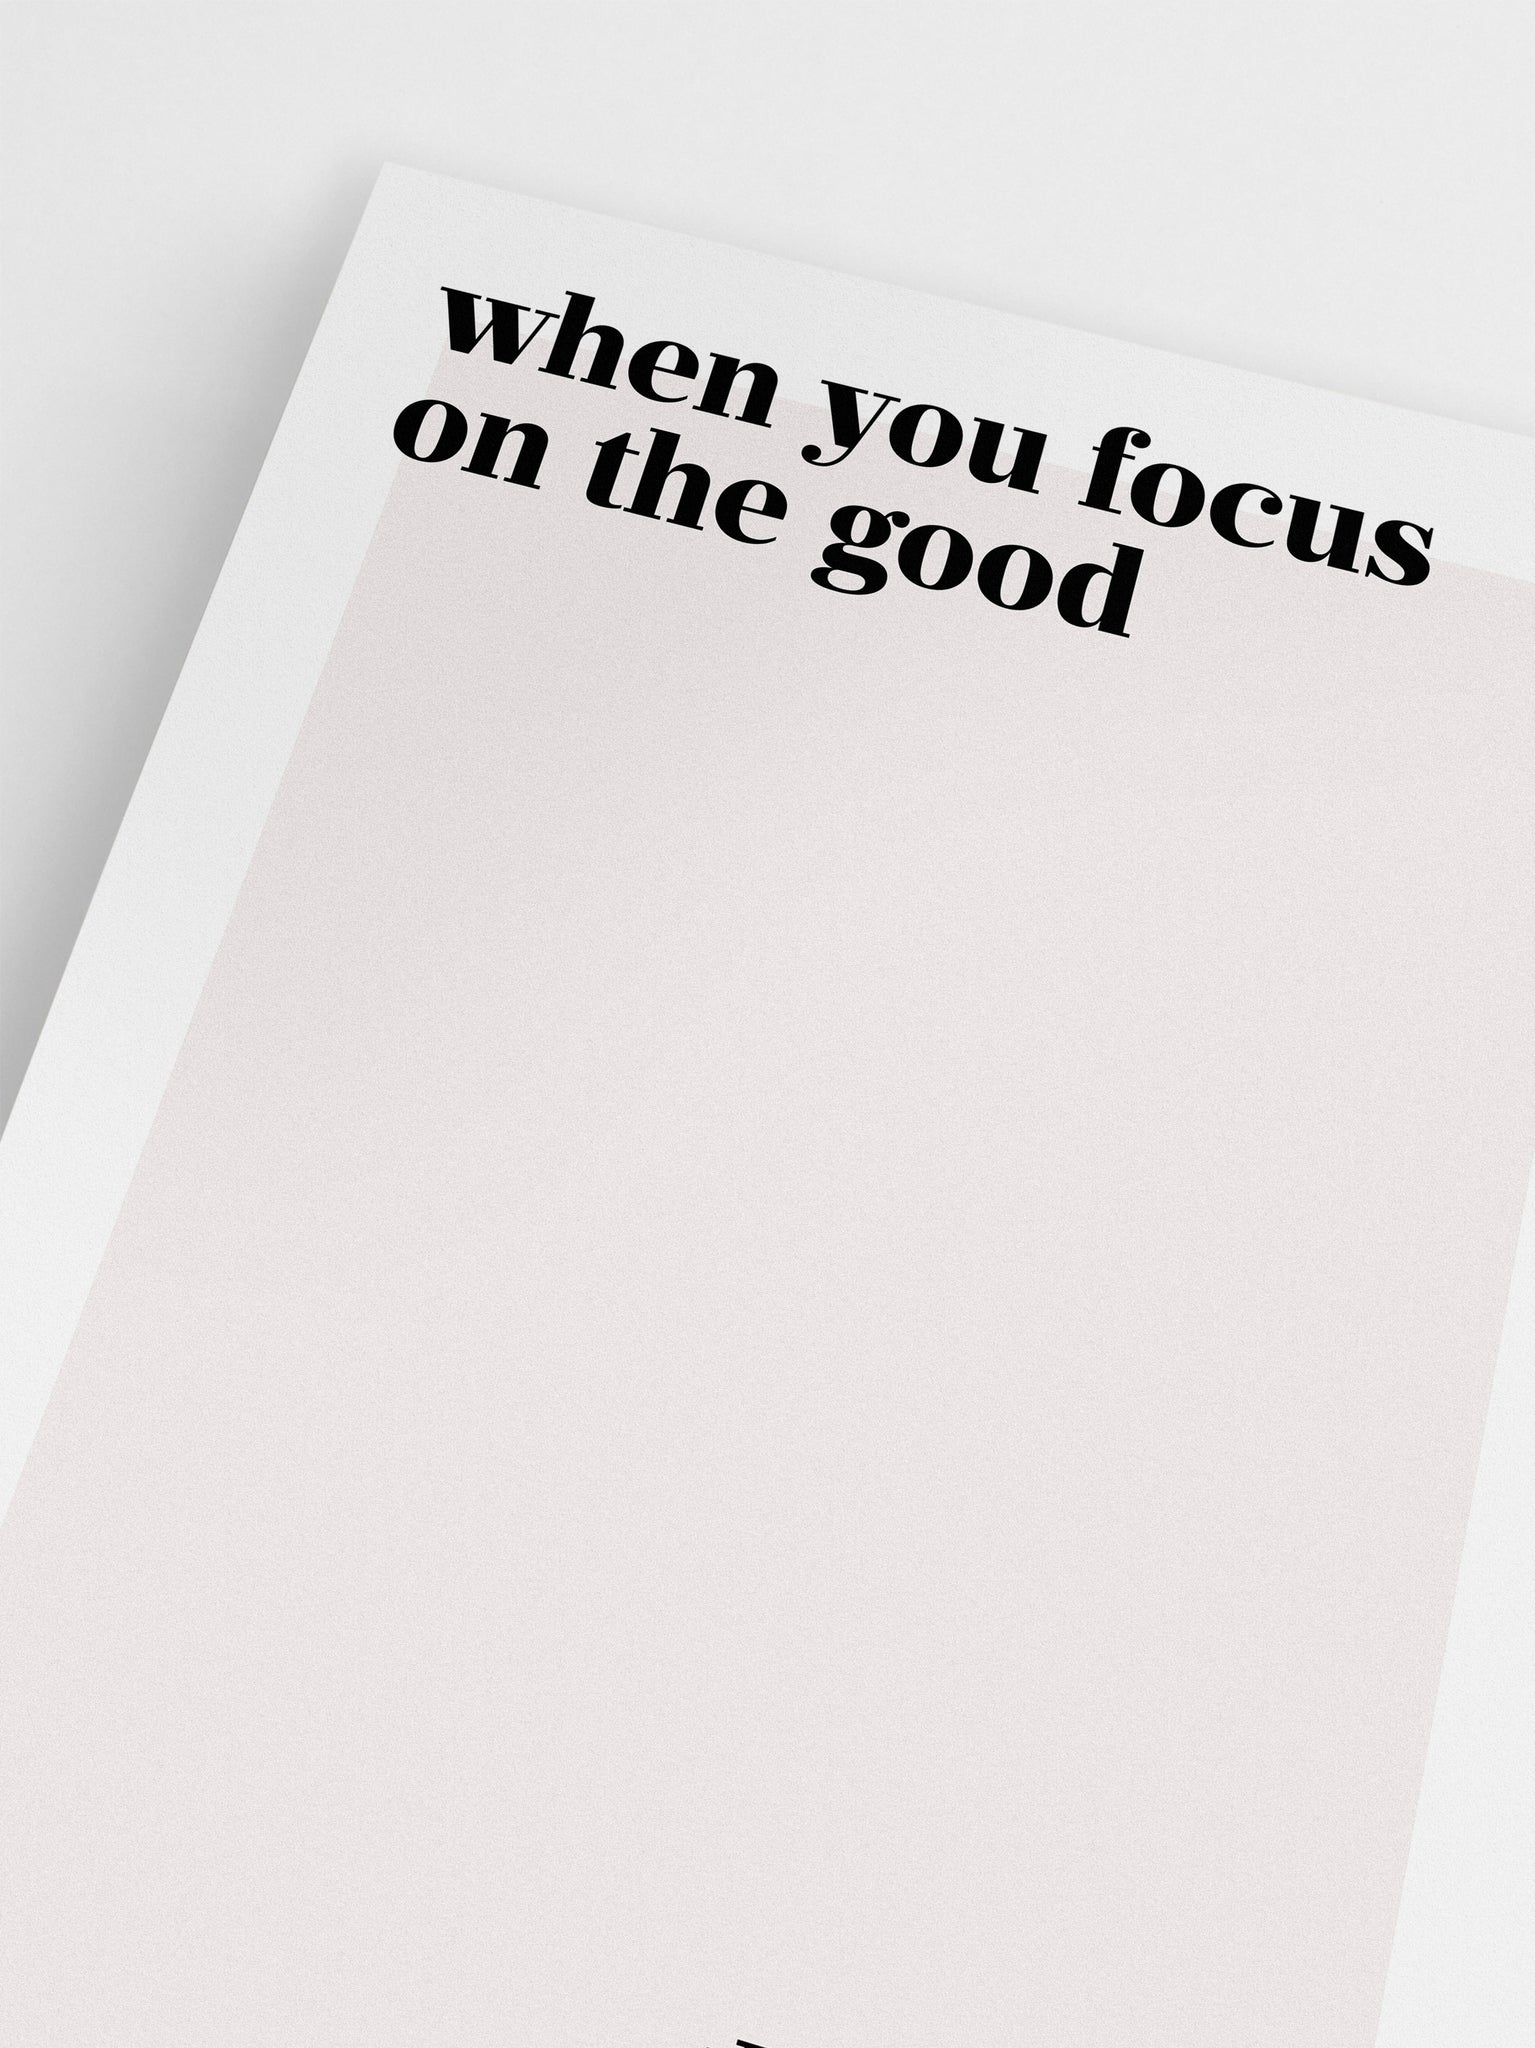 Focus on the Good  Print